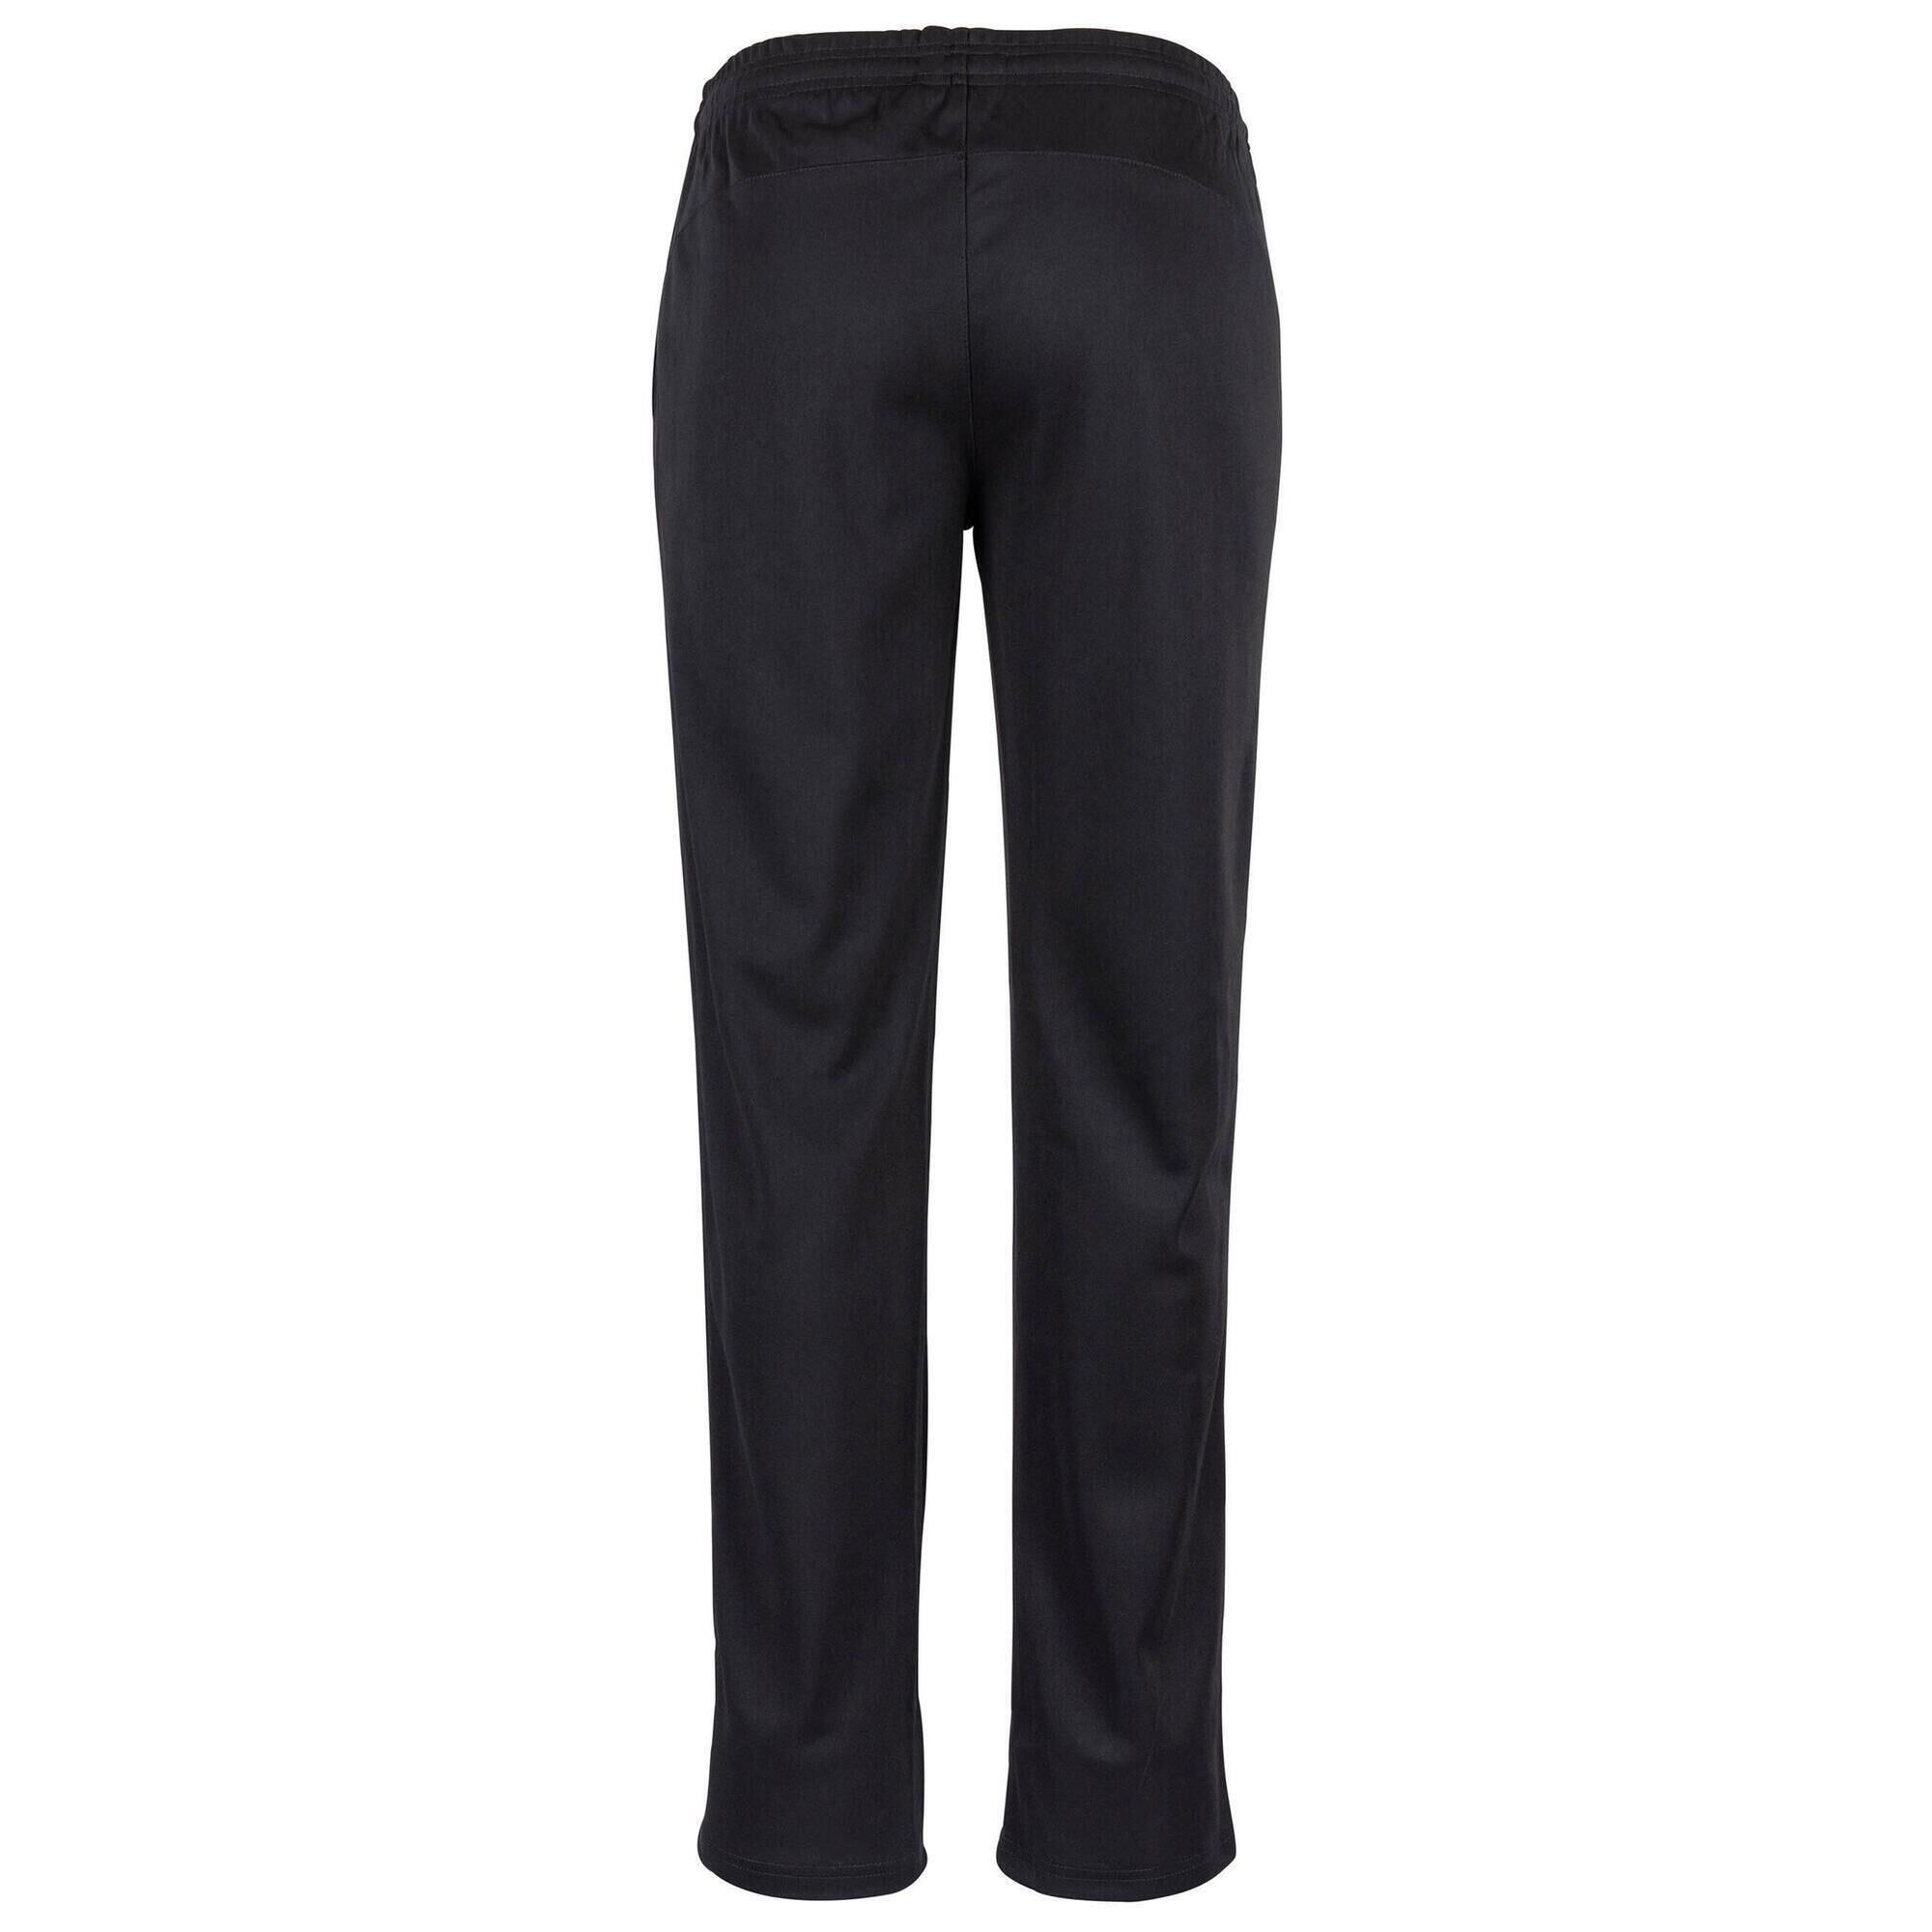 GRAY-NICOLLS Matrix V2 Women's Trousers,  Black